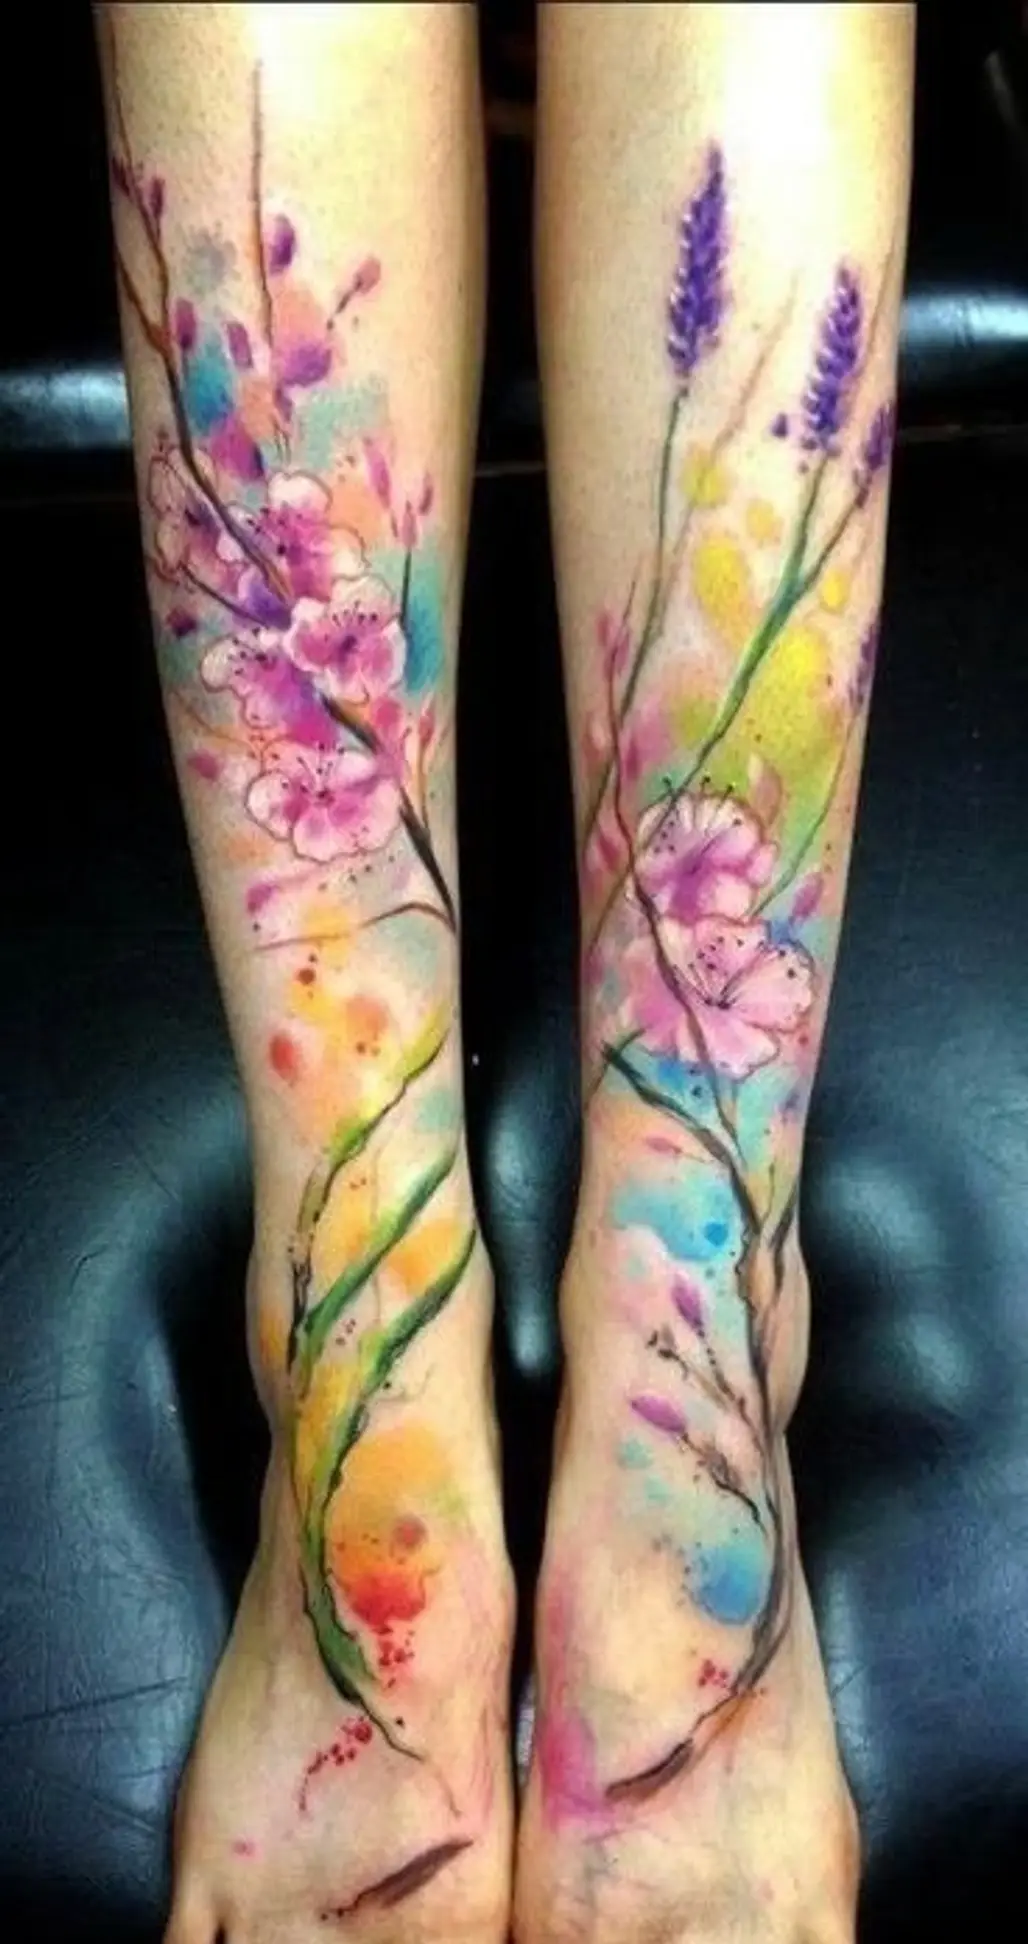 tattoo,arm,leg,thigh,human body,